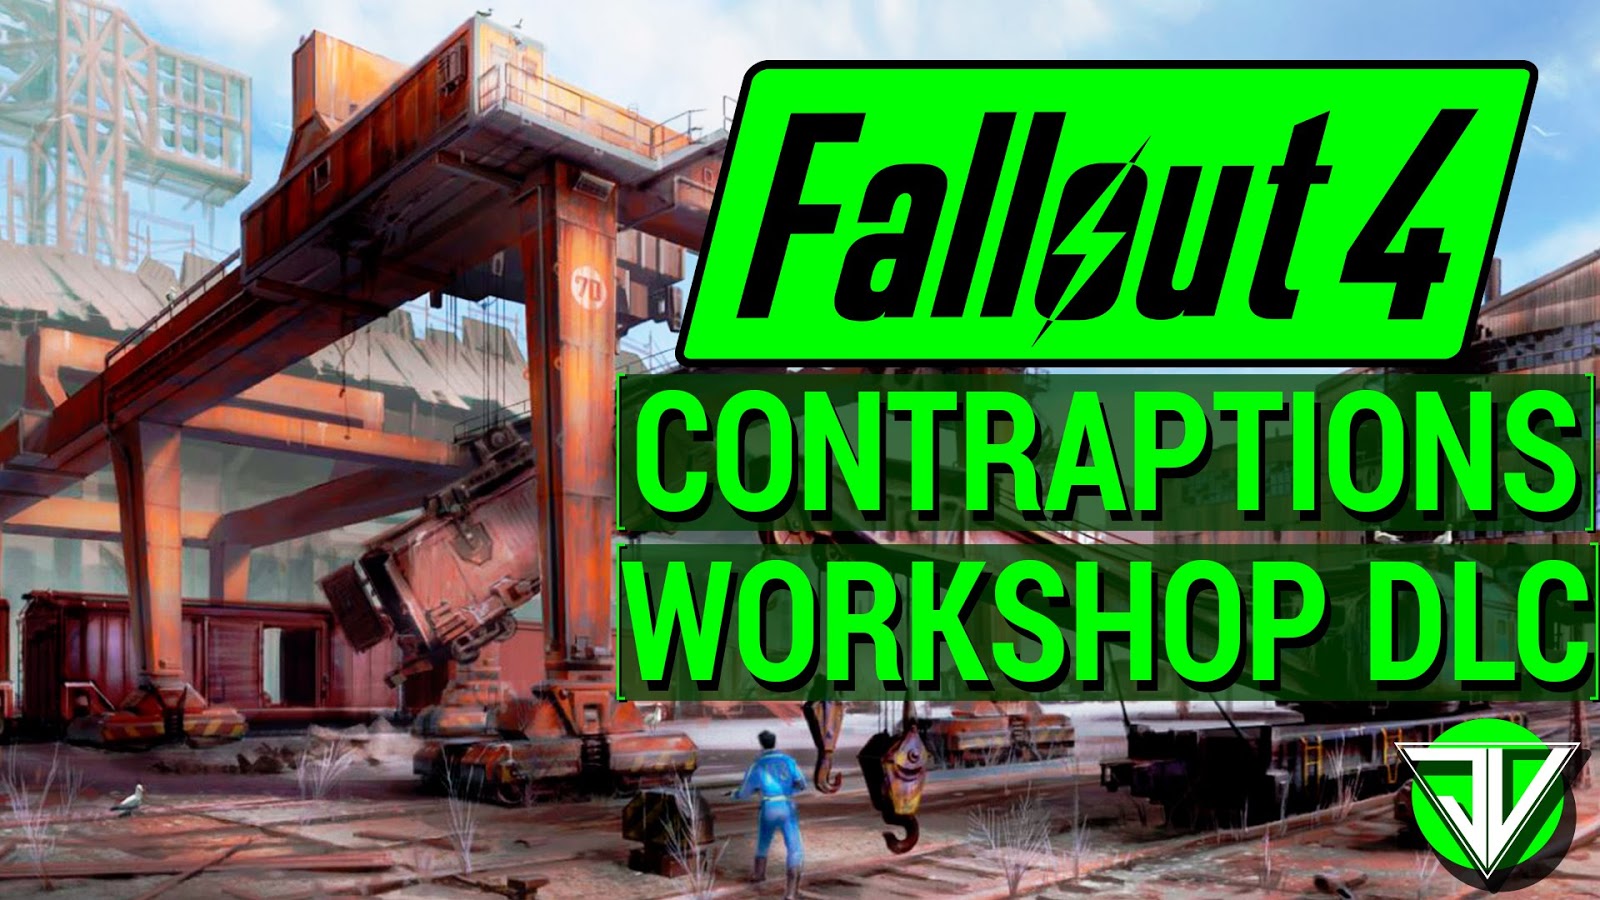 Contraptions workshop fallout 4 описание фото 31